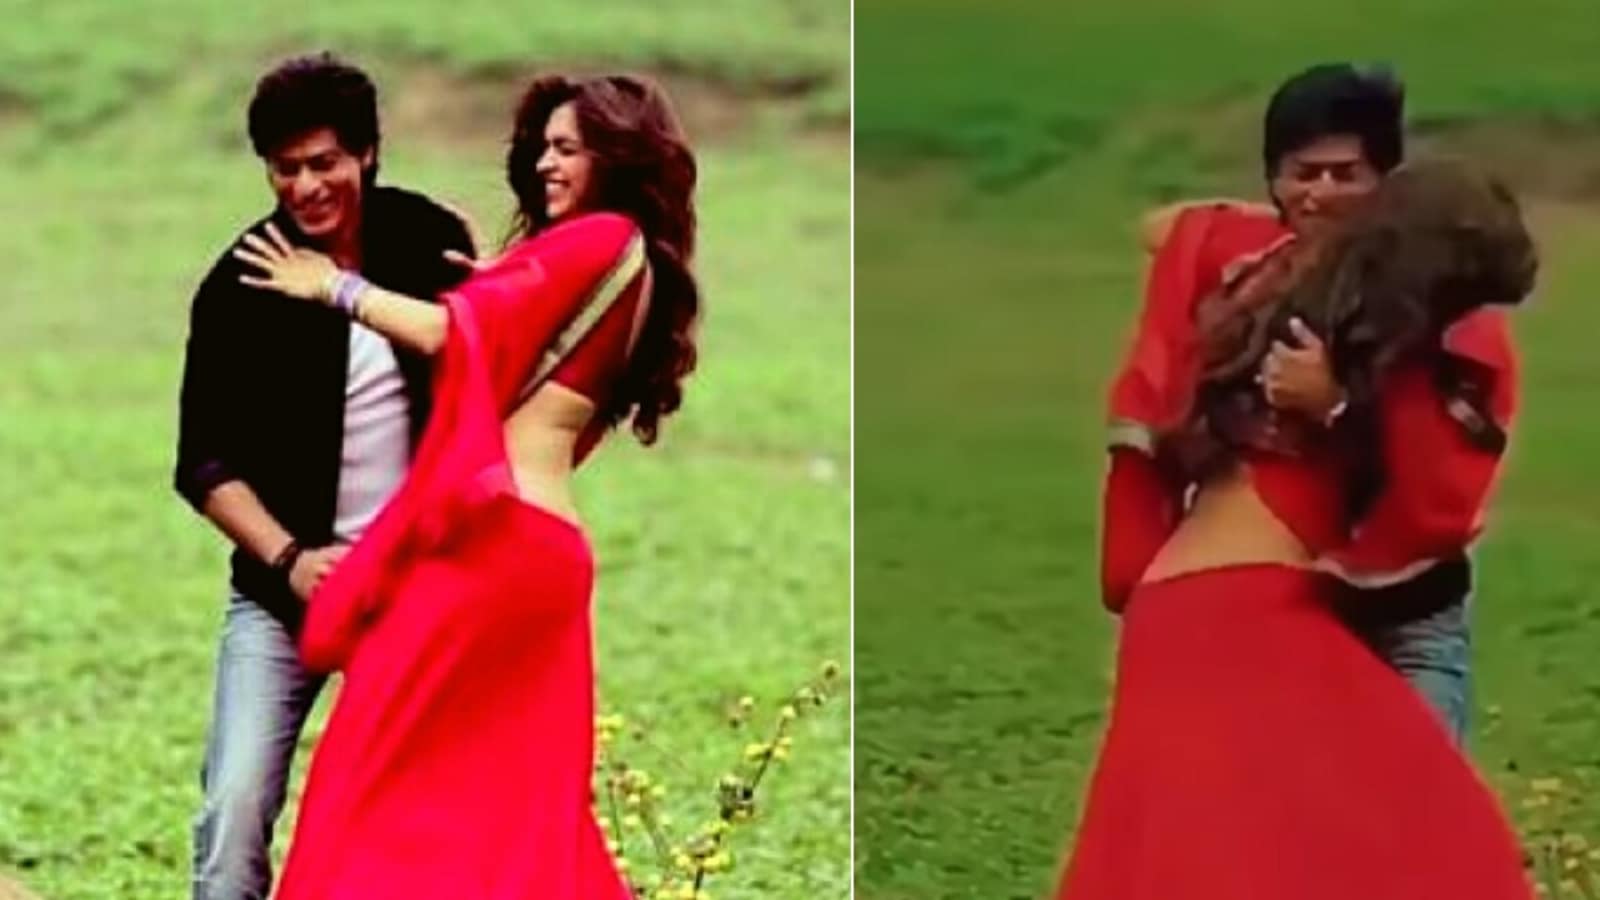 Shah Rukh Khan, Deepika Padukone fall hard in cute Chennai Express